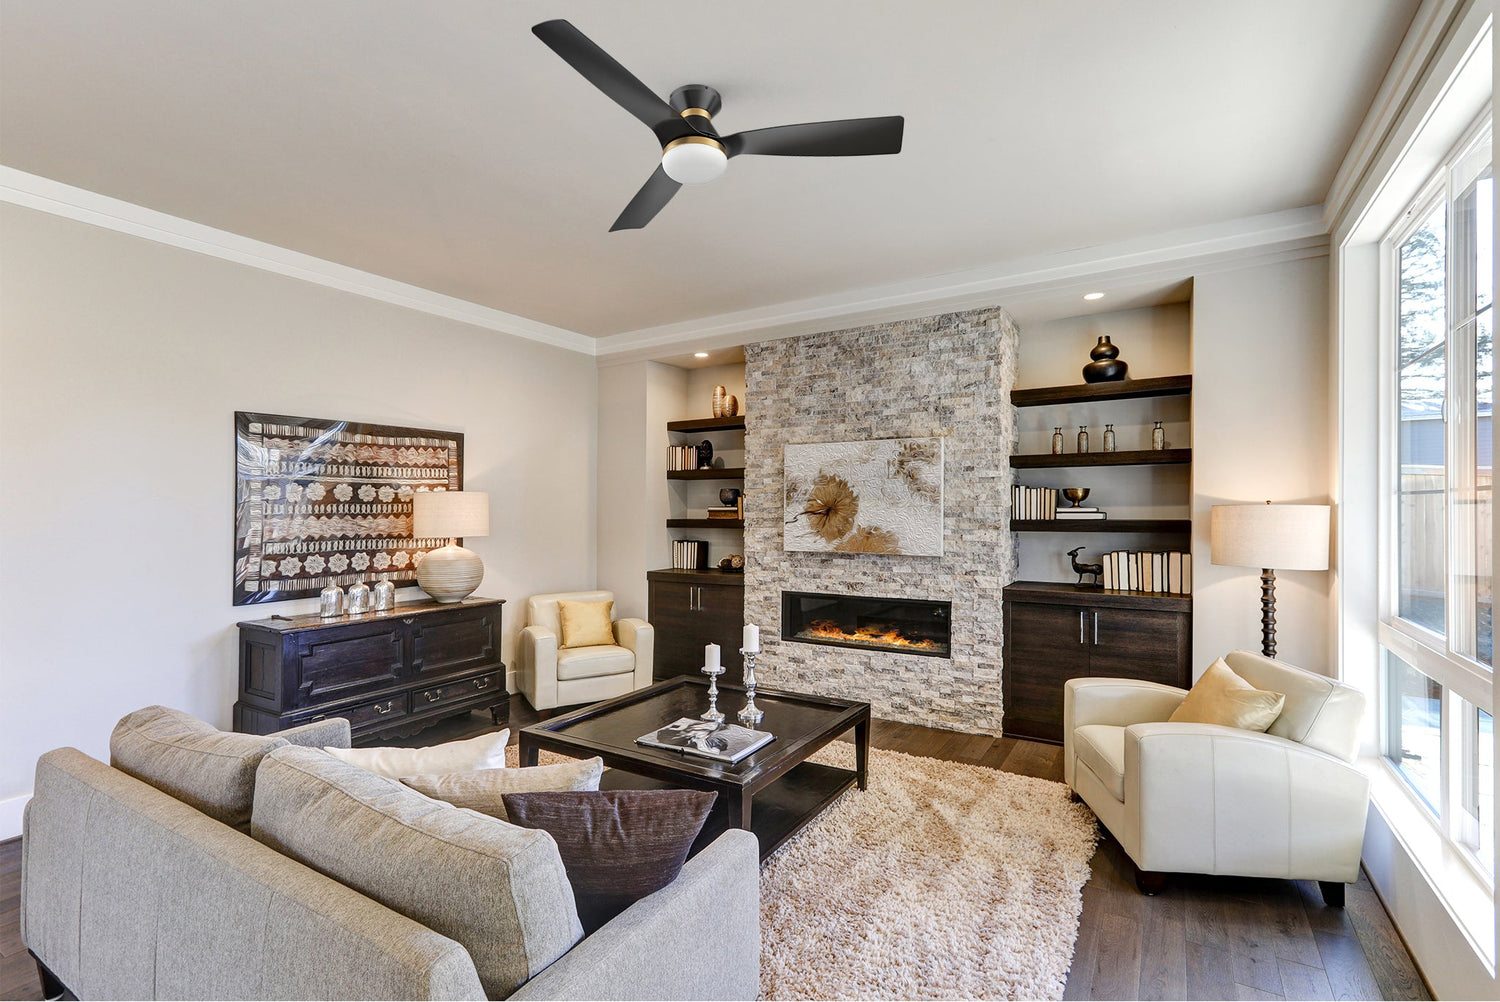 Black flush mounting modern ceiling fan with light in modern living room